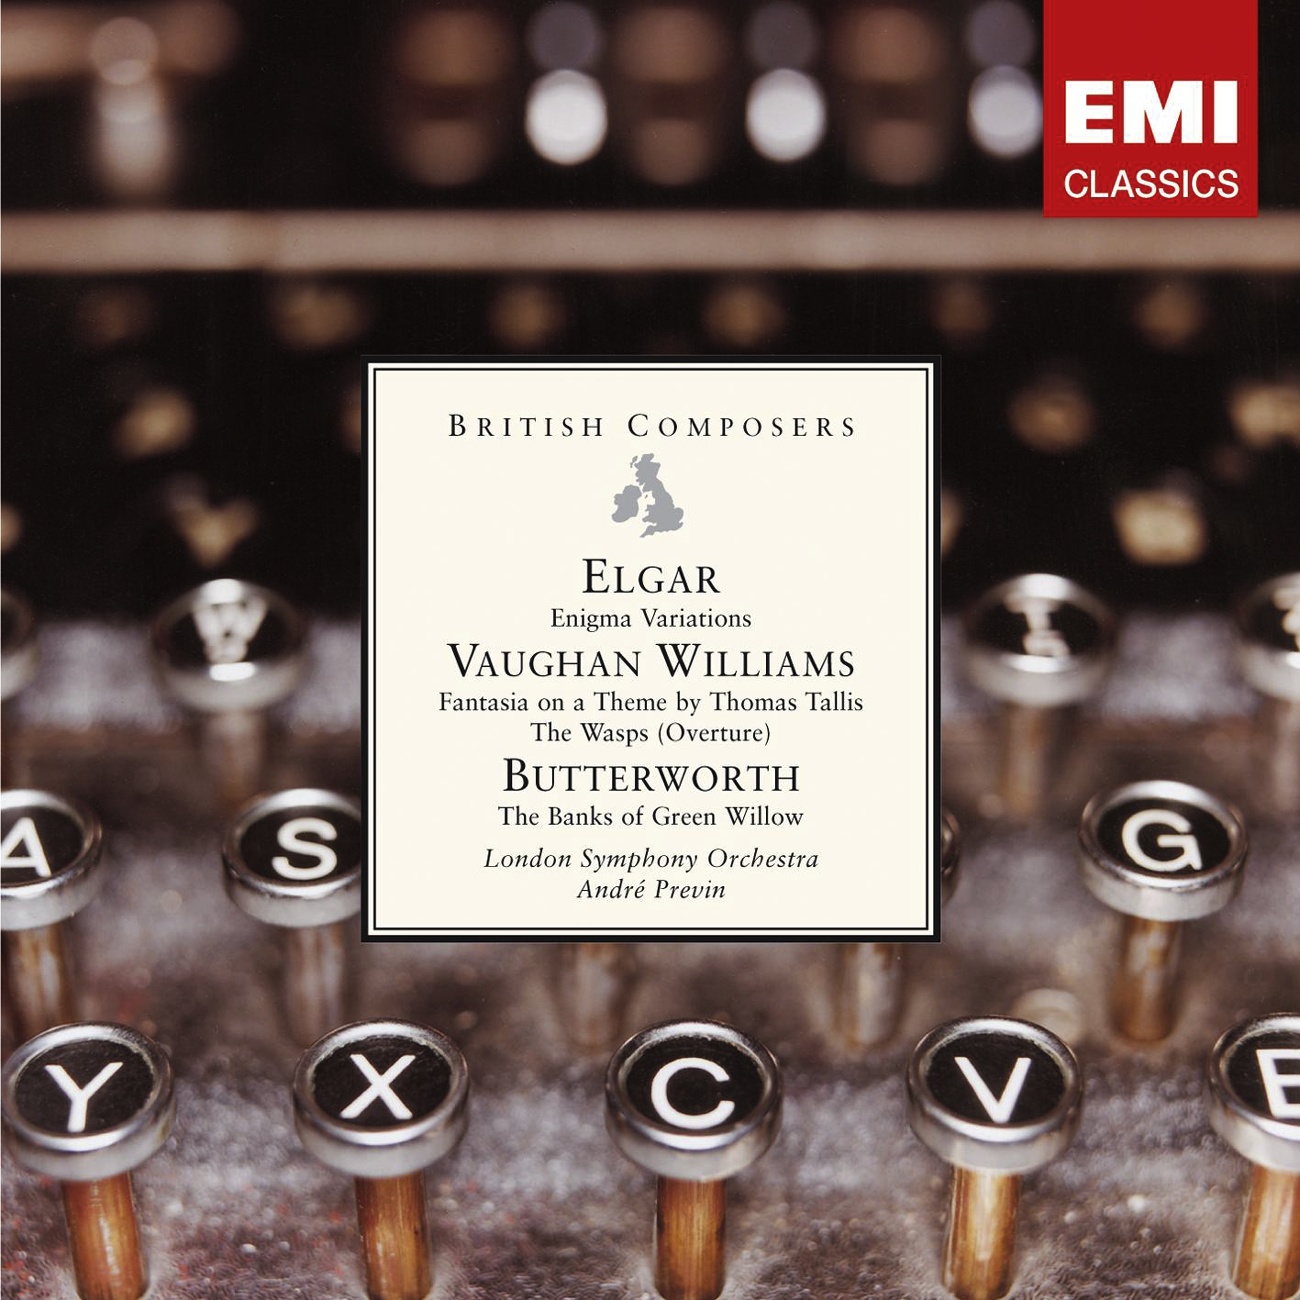 Variations on an Original Theme 'Enigma' Op. 36 (2007 Digital Remaster): III.     R.B.T. (Richard Baxter Townshend) (Allegretto)